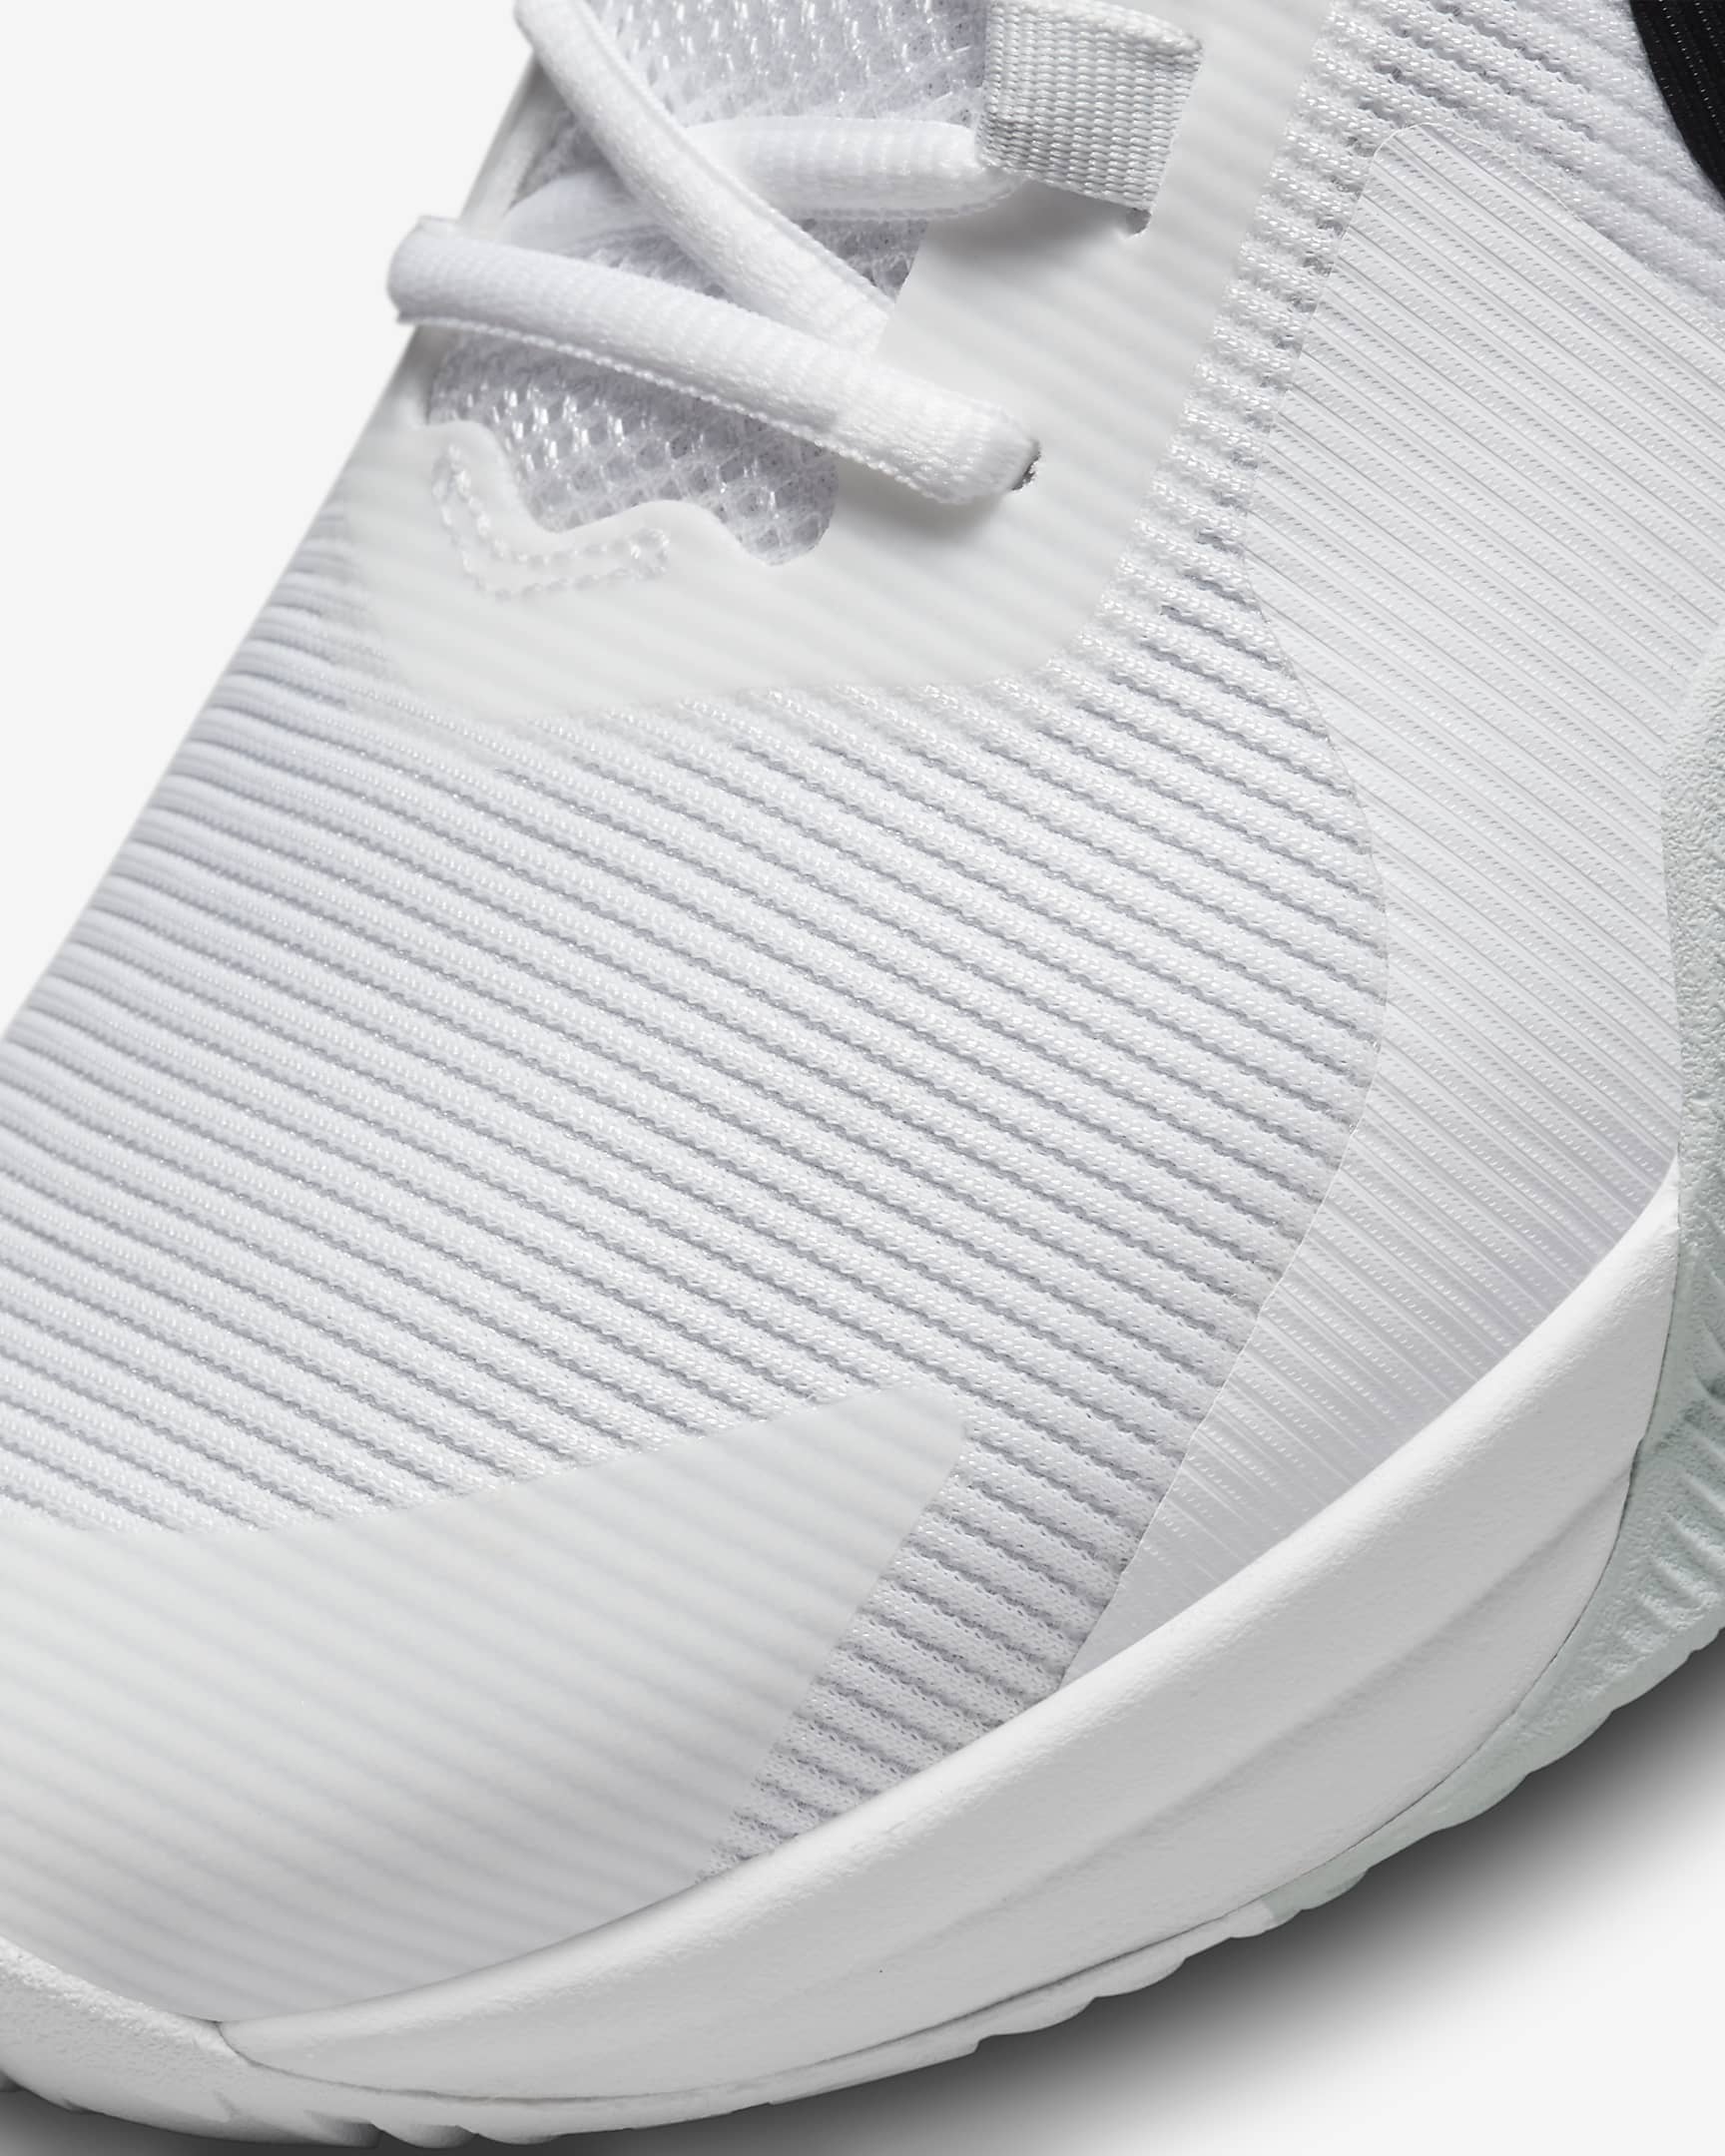 Nike Impact 4 Basketball Shoes - White/Pure Platinum/Black